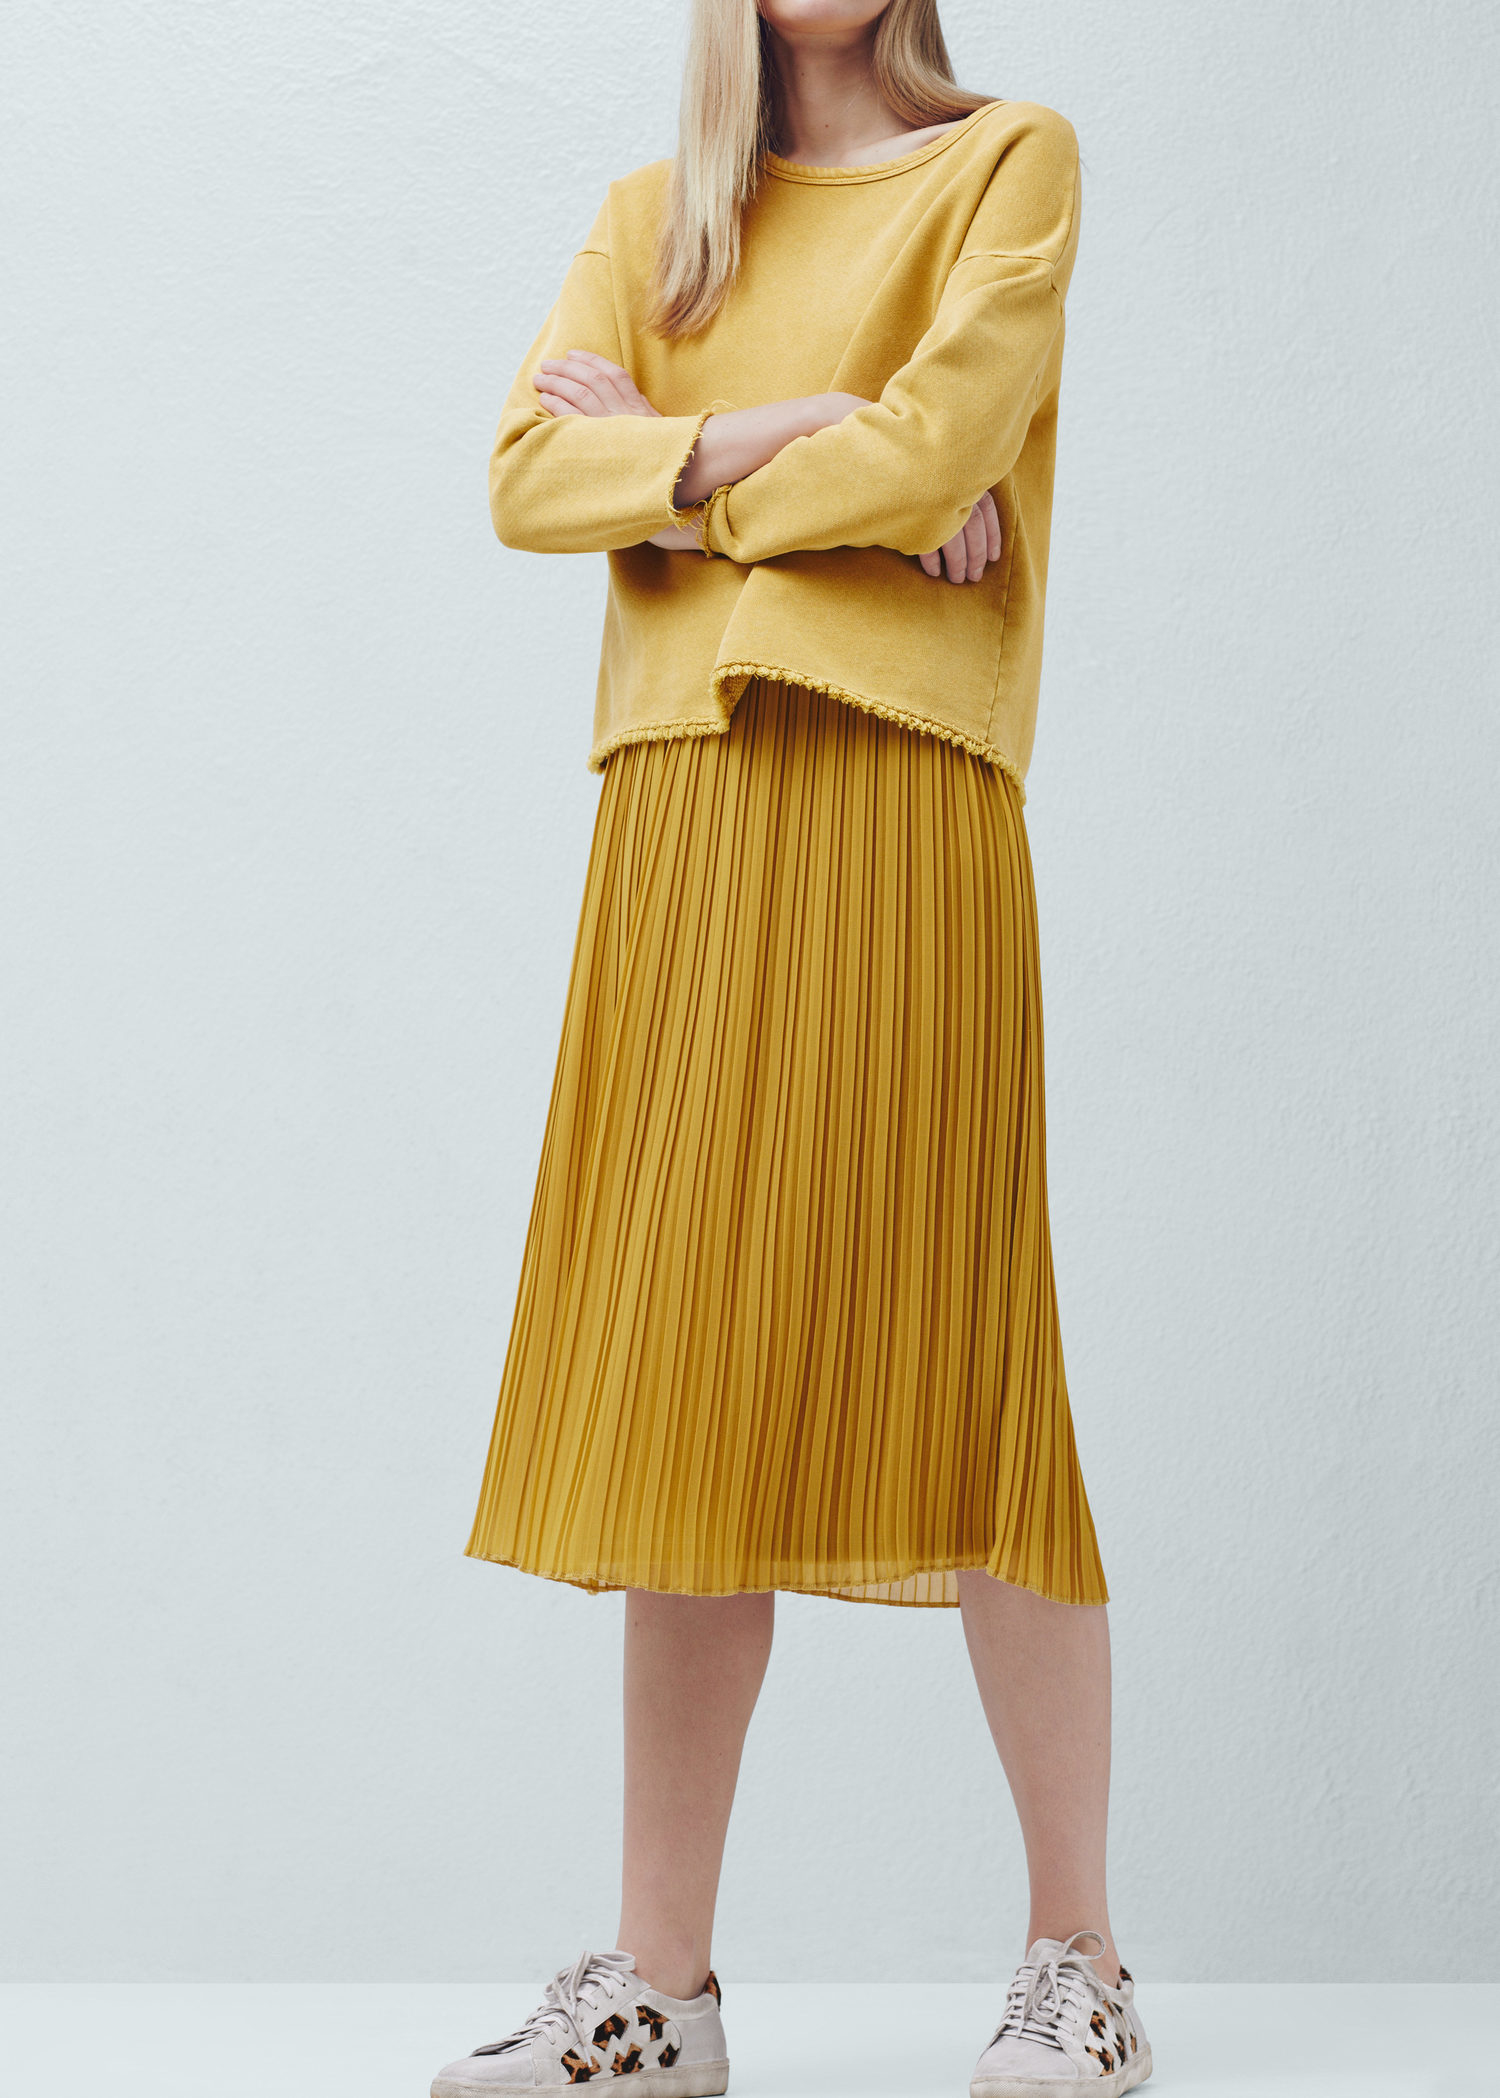 Lyst - Mango Pleated Midi Skirt in Yellow